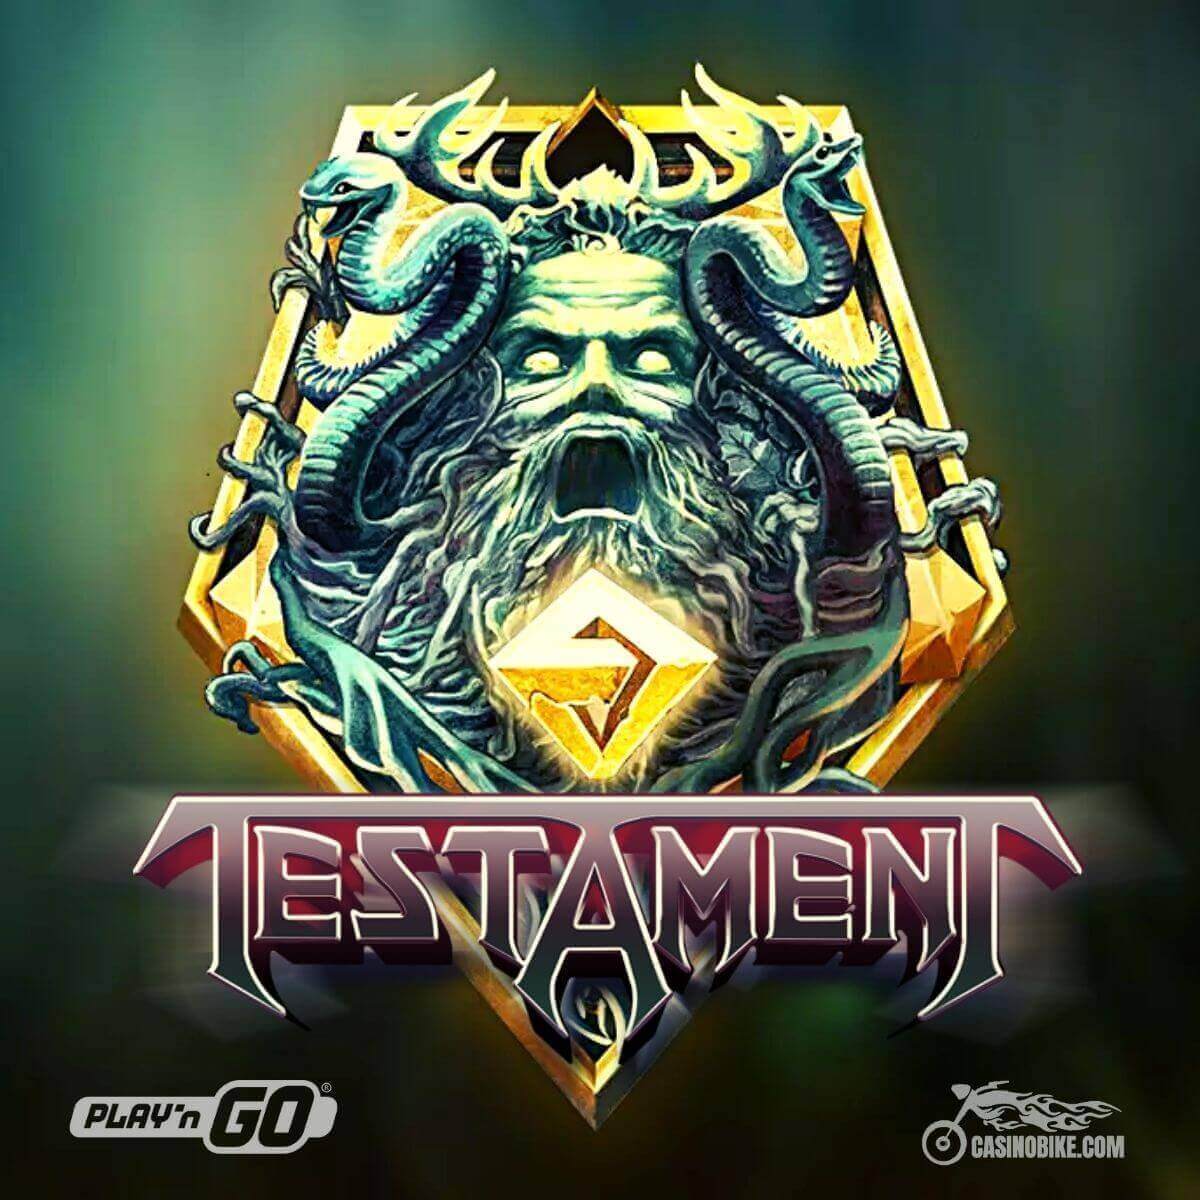 Testament Slot by Play'n Go